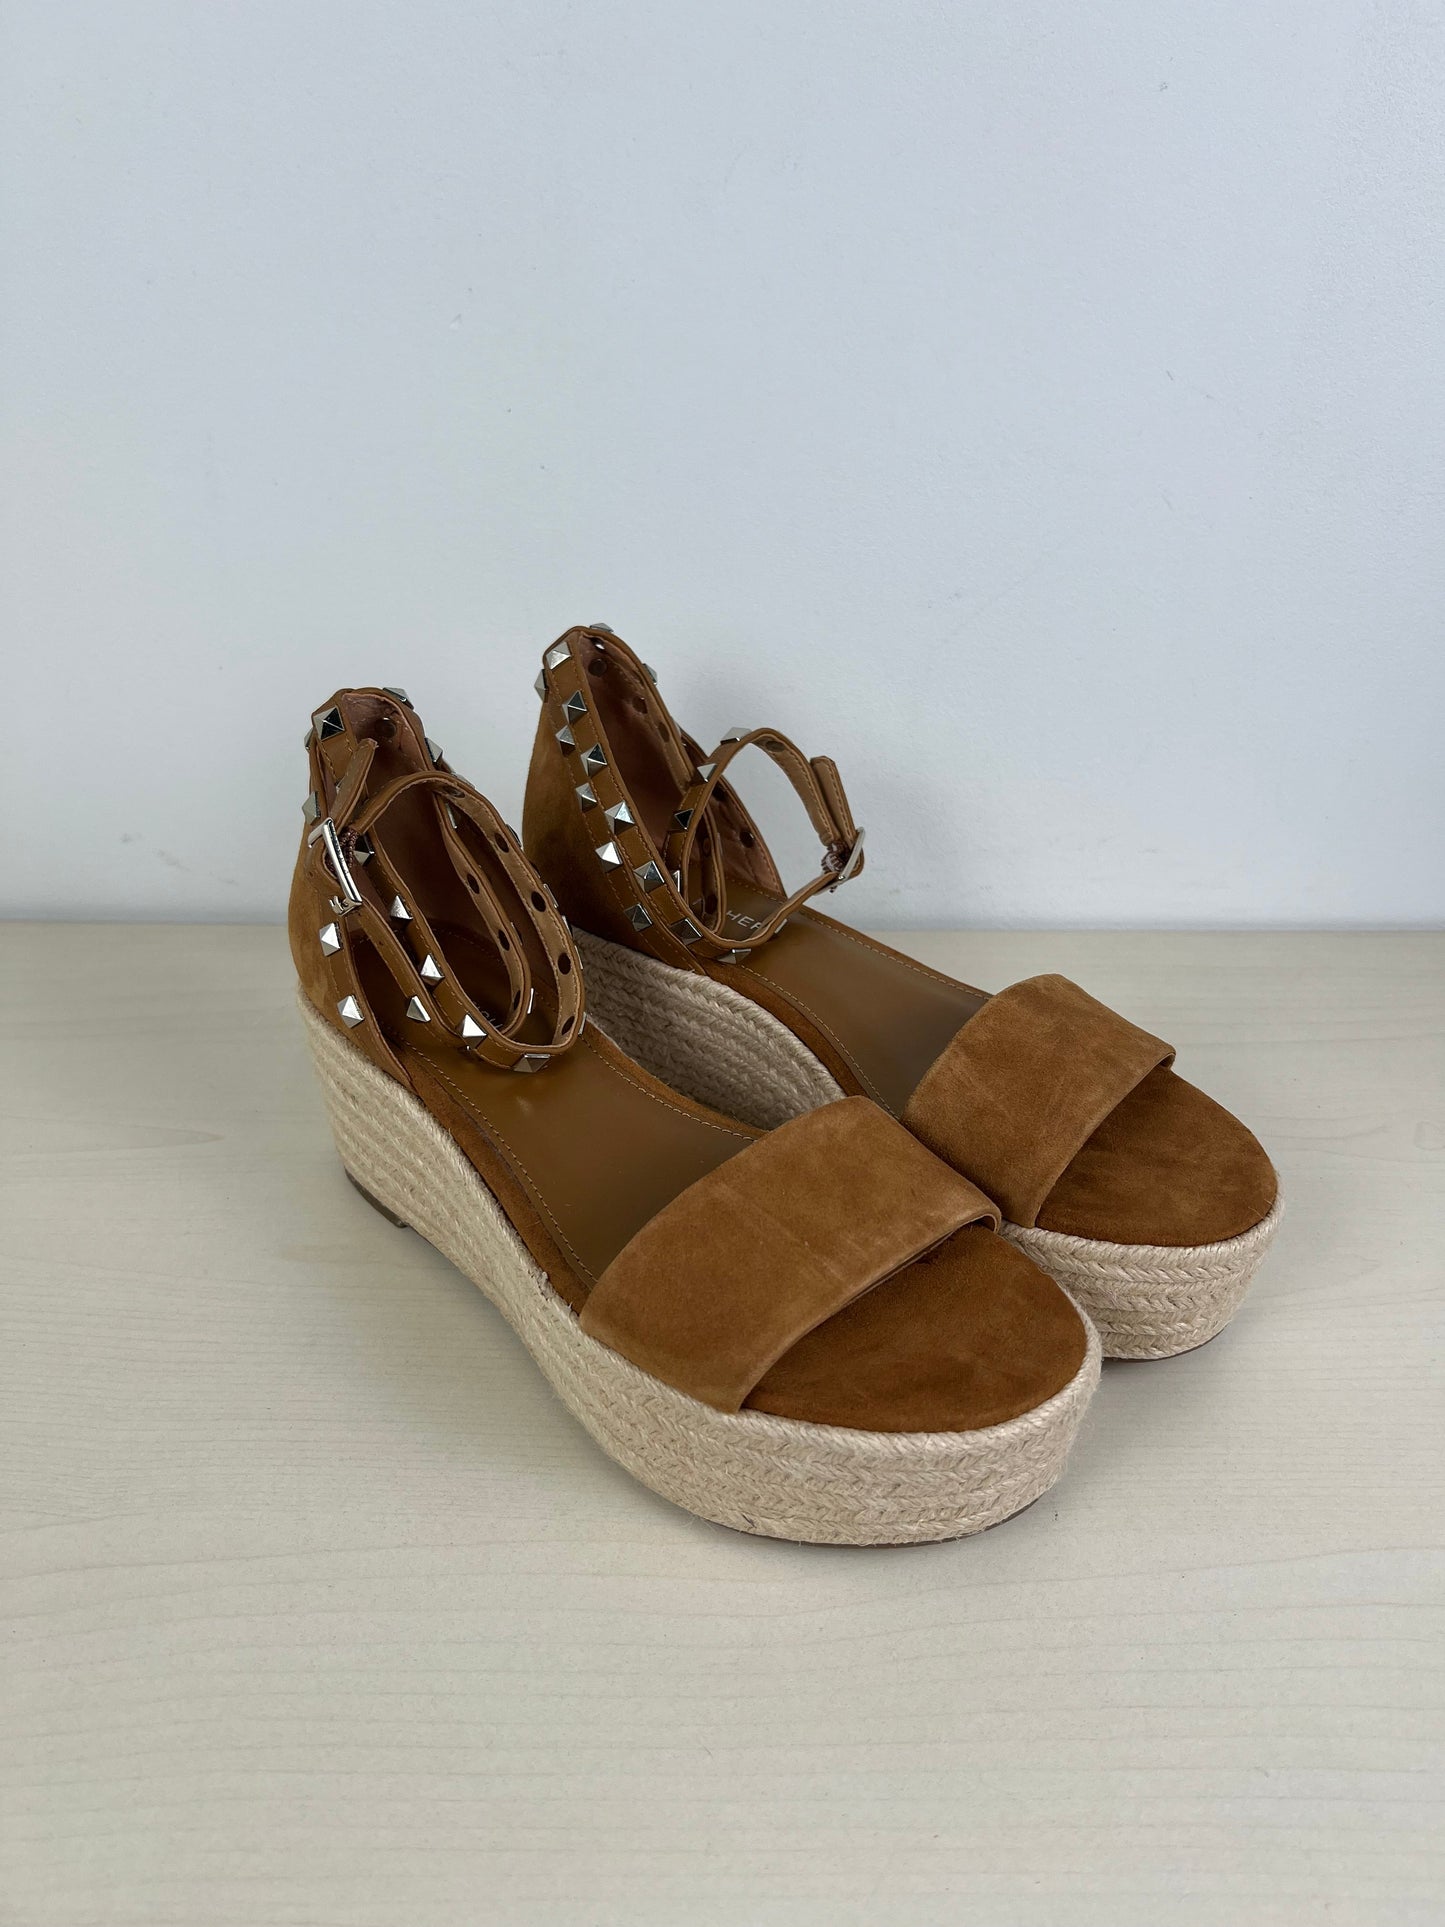 Tan Sandals Heels Platform Marc Fisher, Size 7